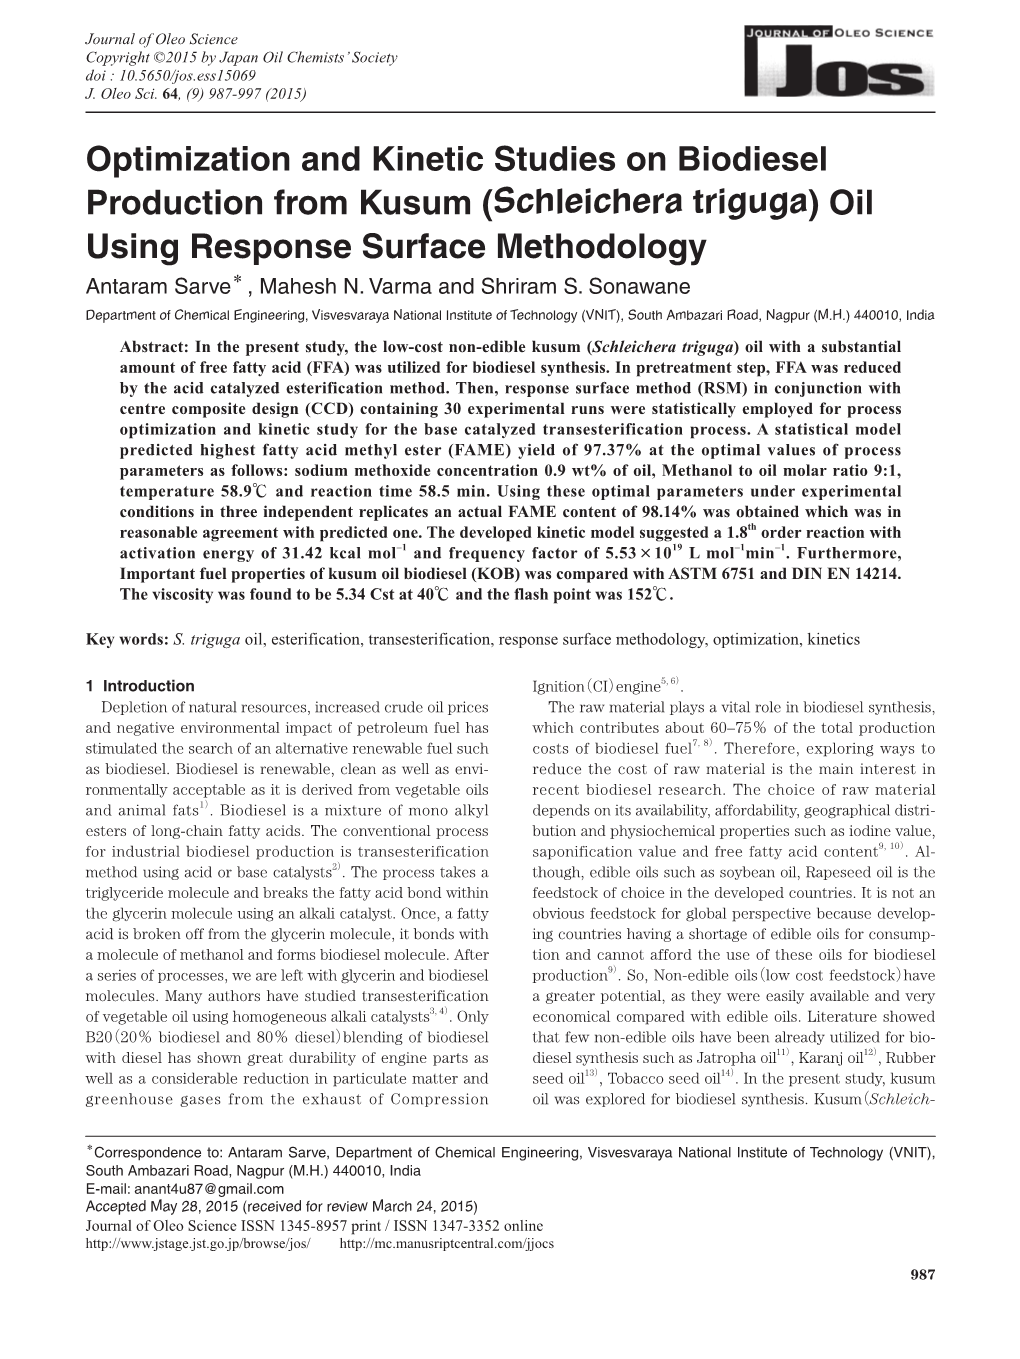 Optimization and Kinetic Studies on Biodiesel Production from Kusum (Schleichera Triguga) Oil Using Response Surface Methodology Antaram Sarve＊ , Mahesh N